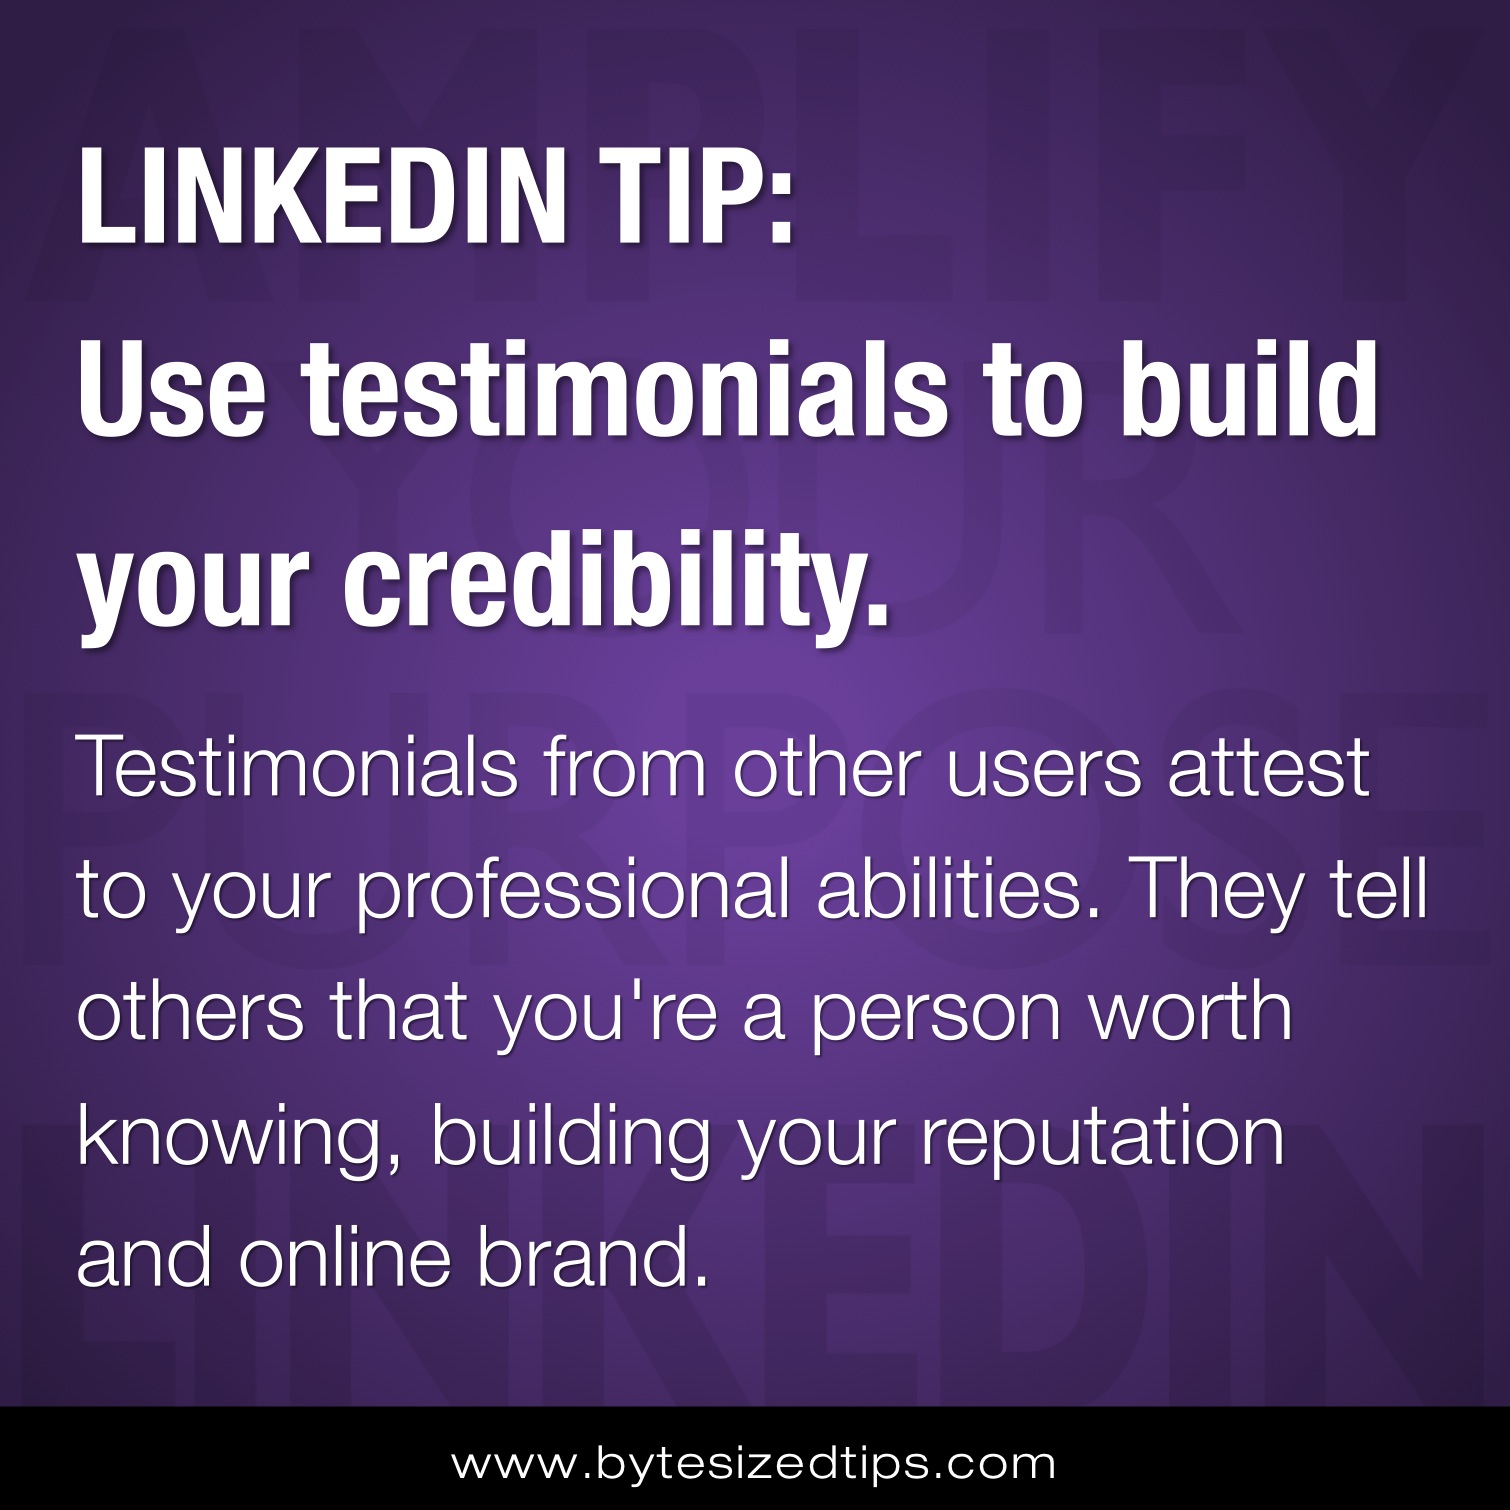 LINKEDIN TIP: Use testimonials to build your credibility.